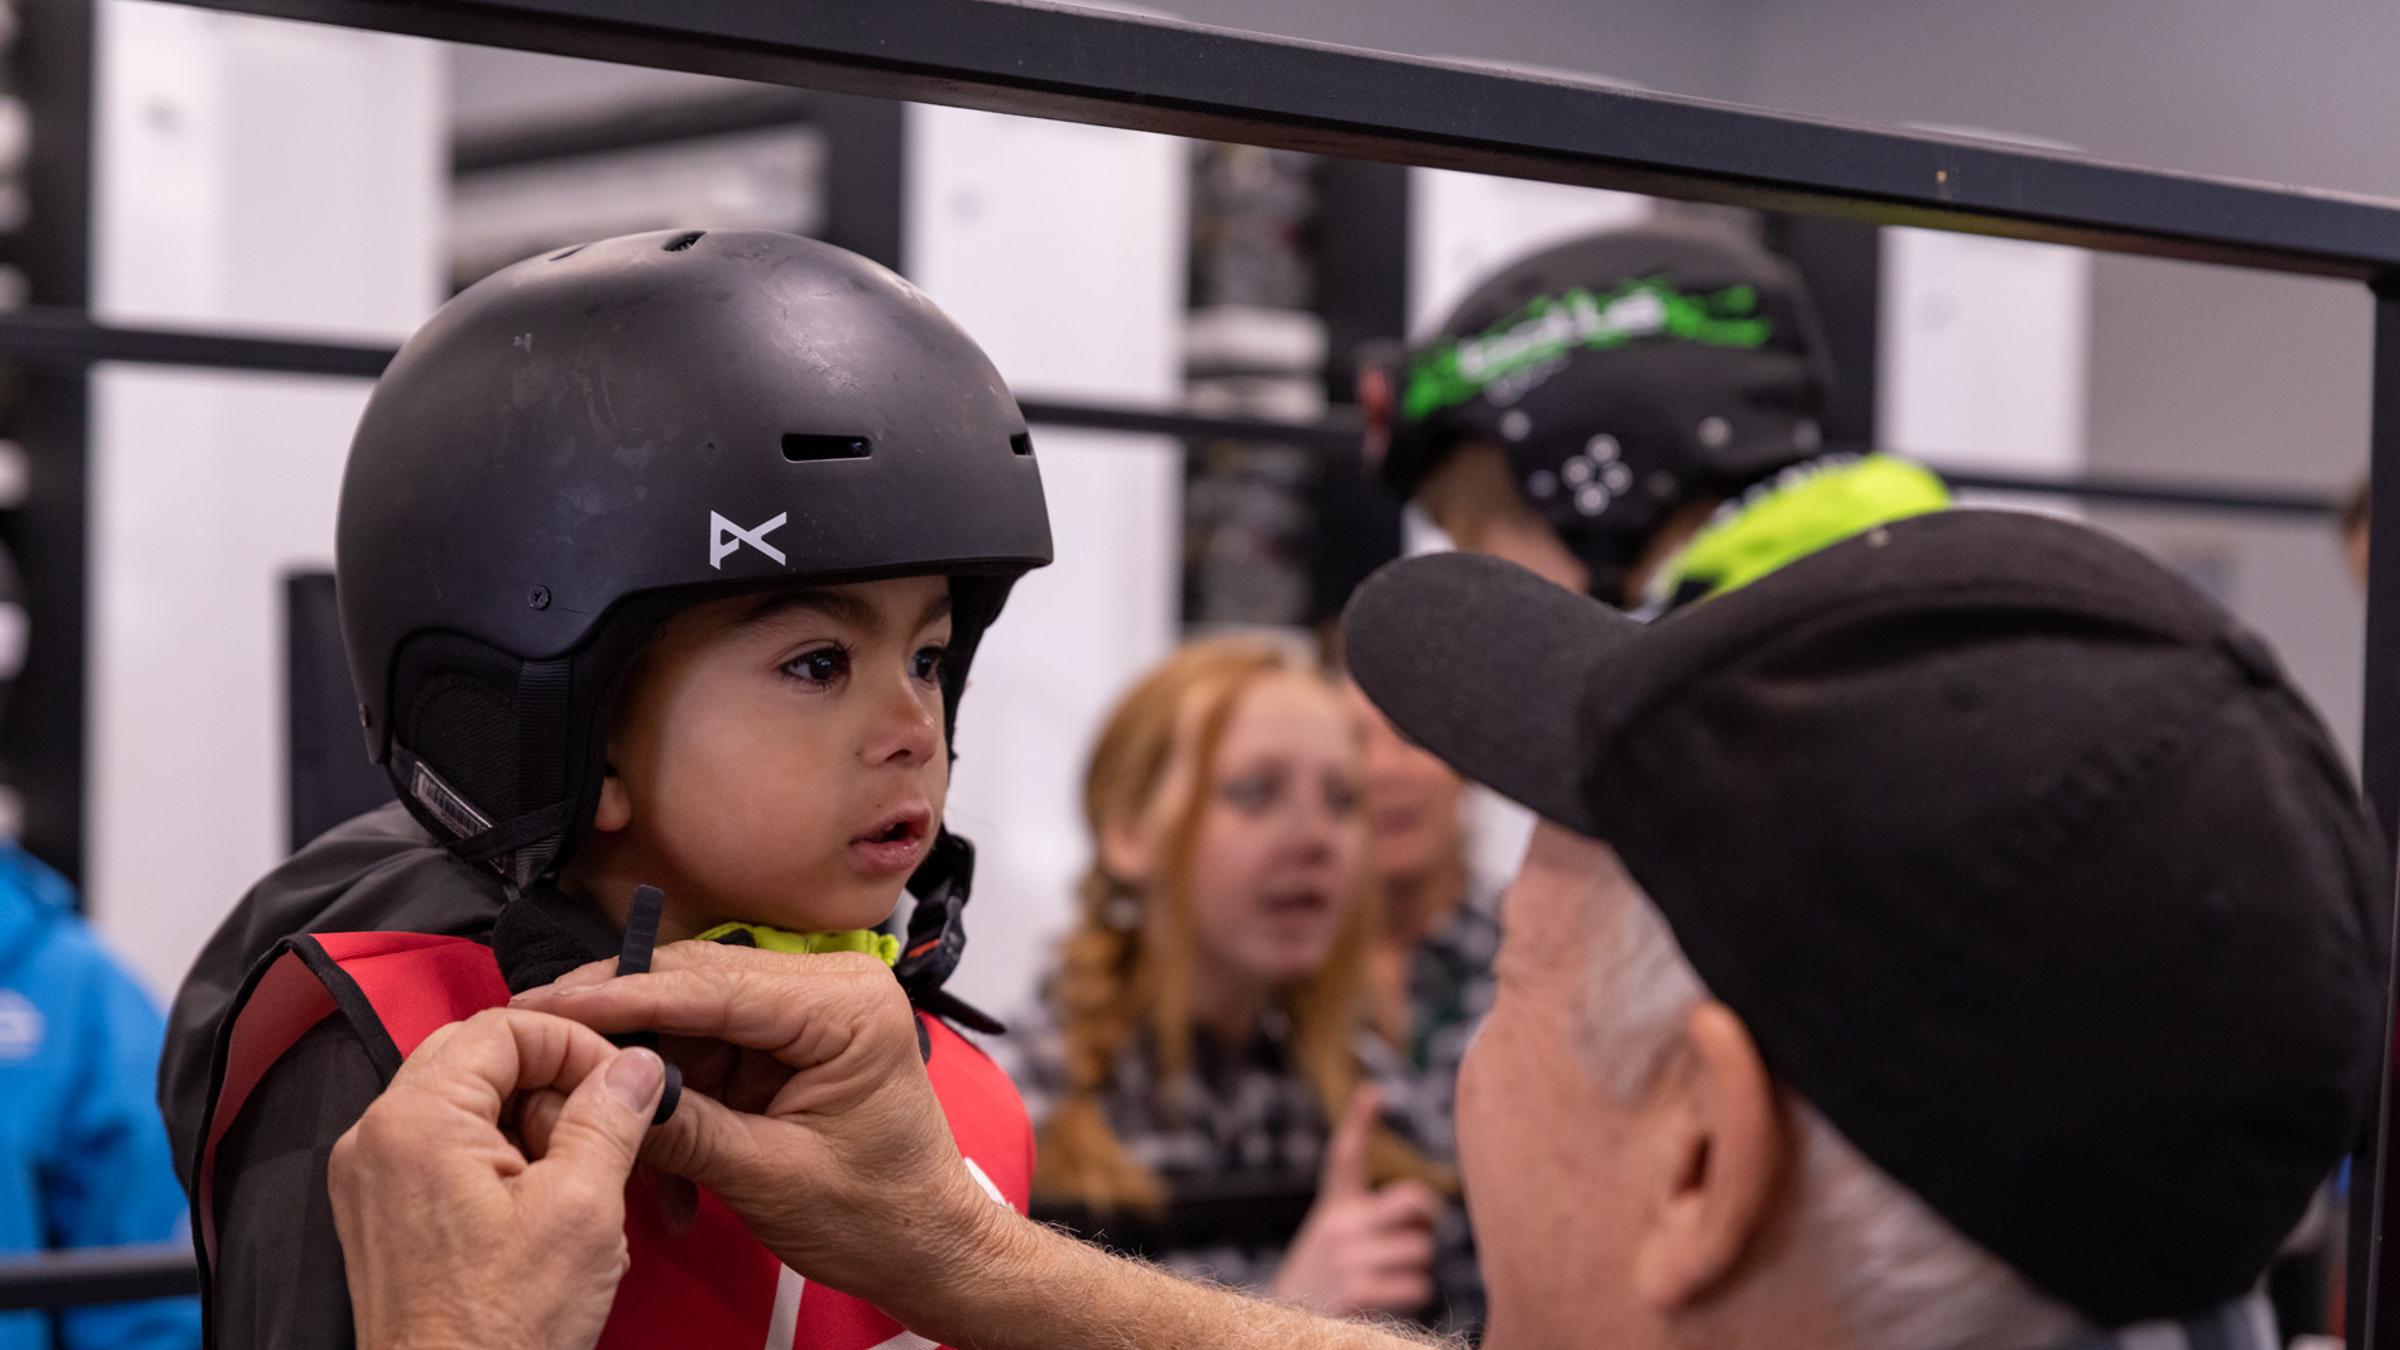 Child getting a rental helmet put on by staff.